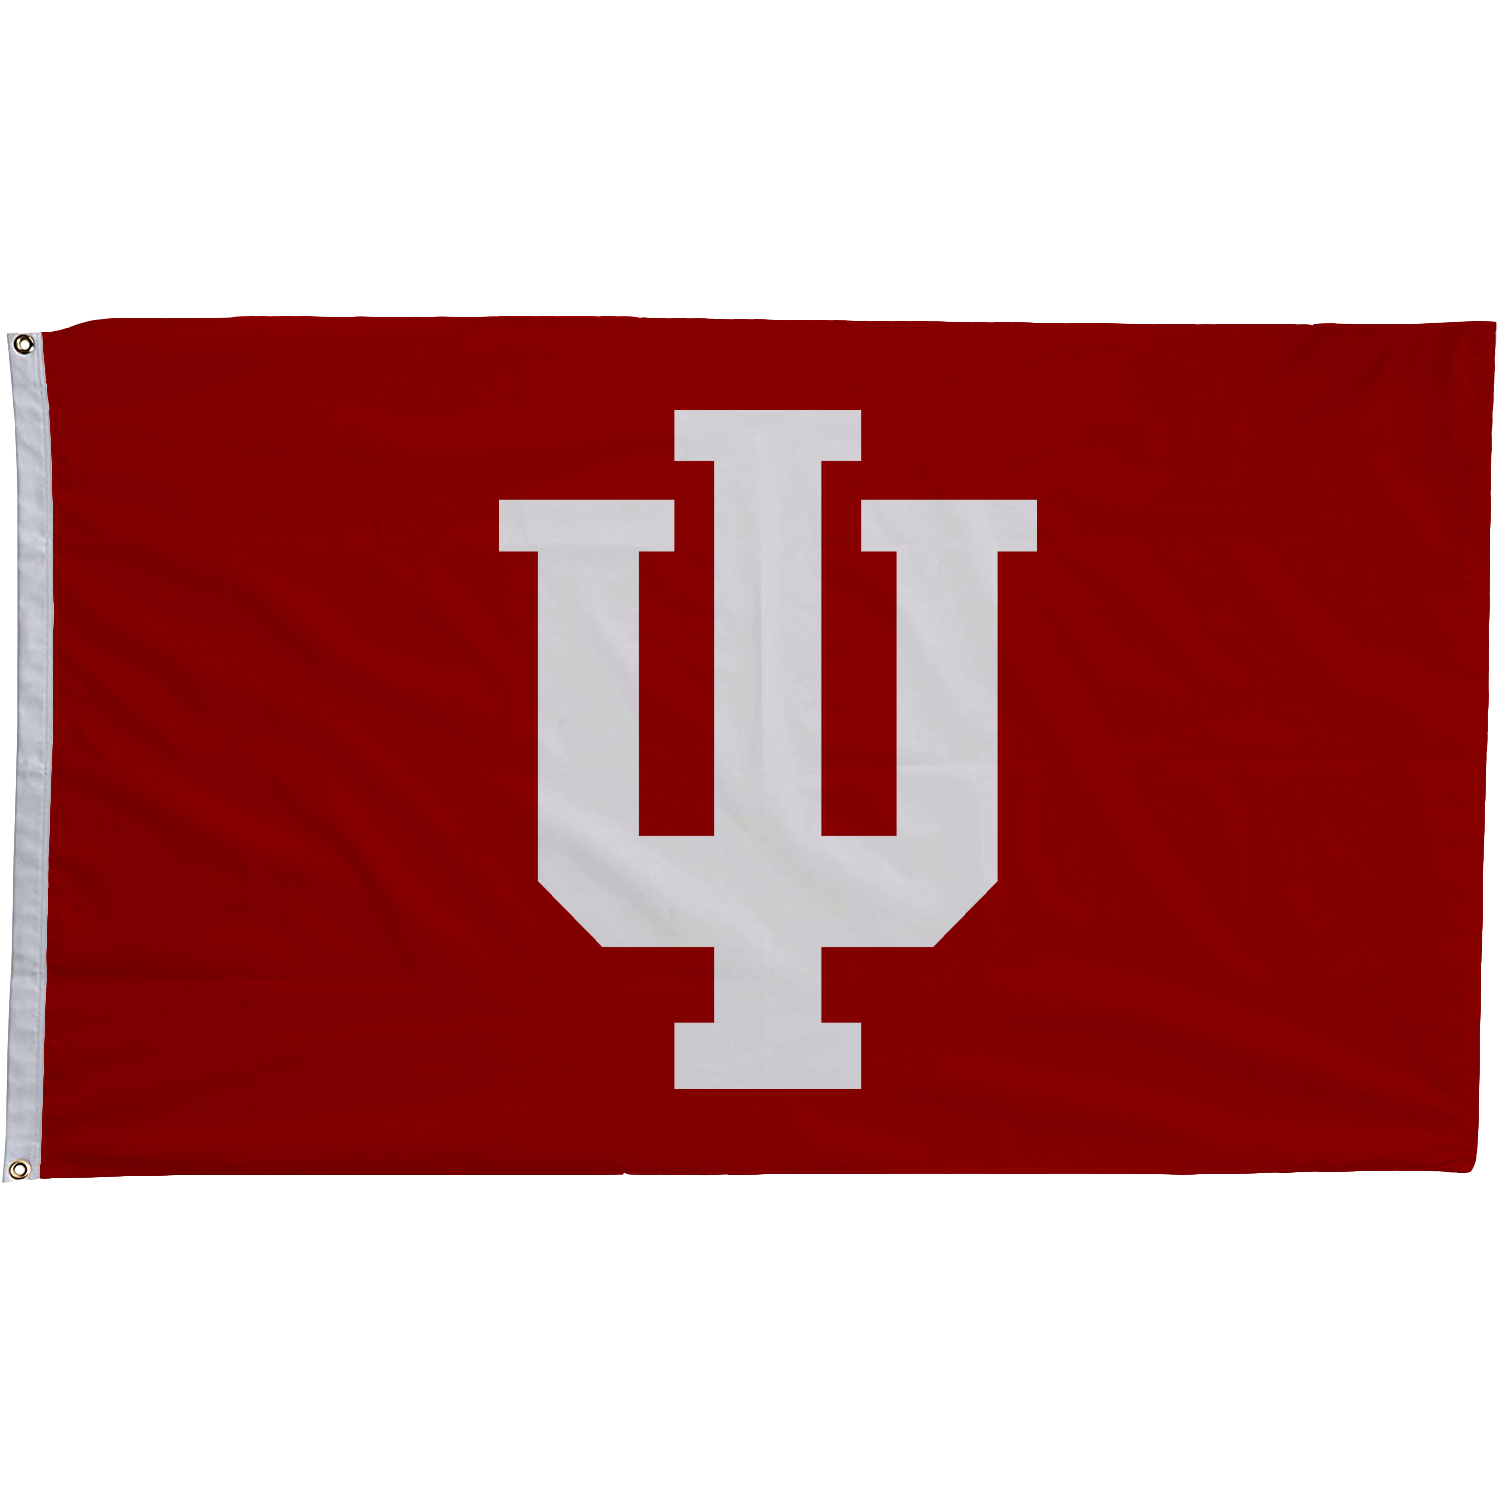 Indiana University Flags, IU Hoosier Flags